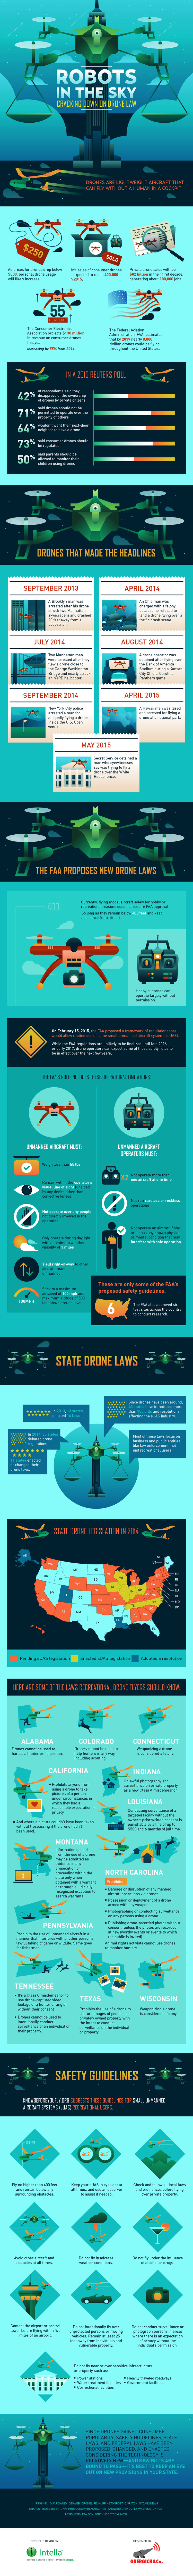 drones-infographic_1_1.jpg